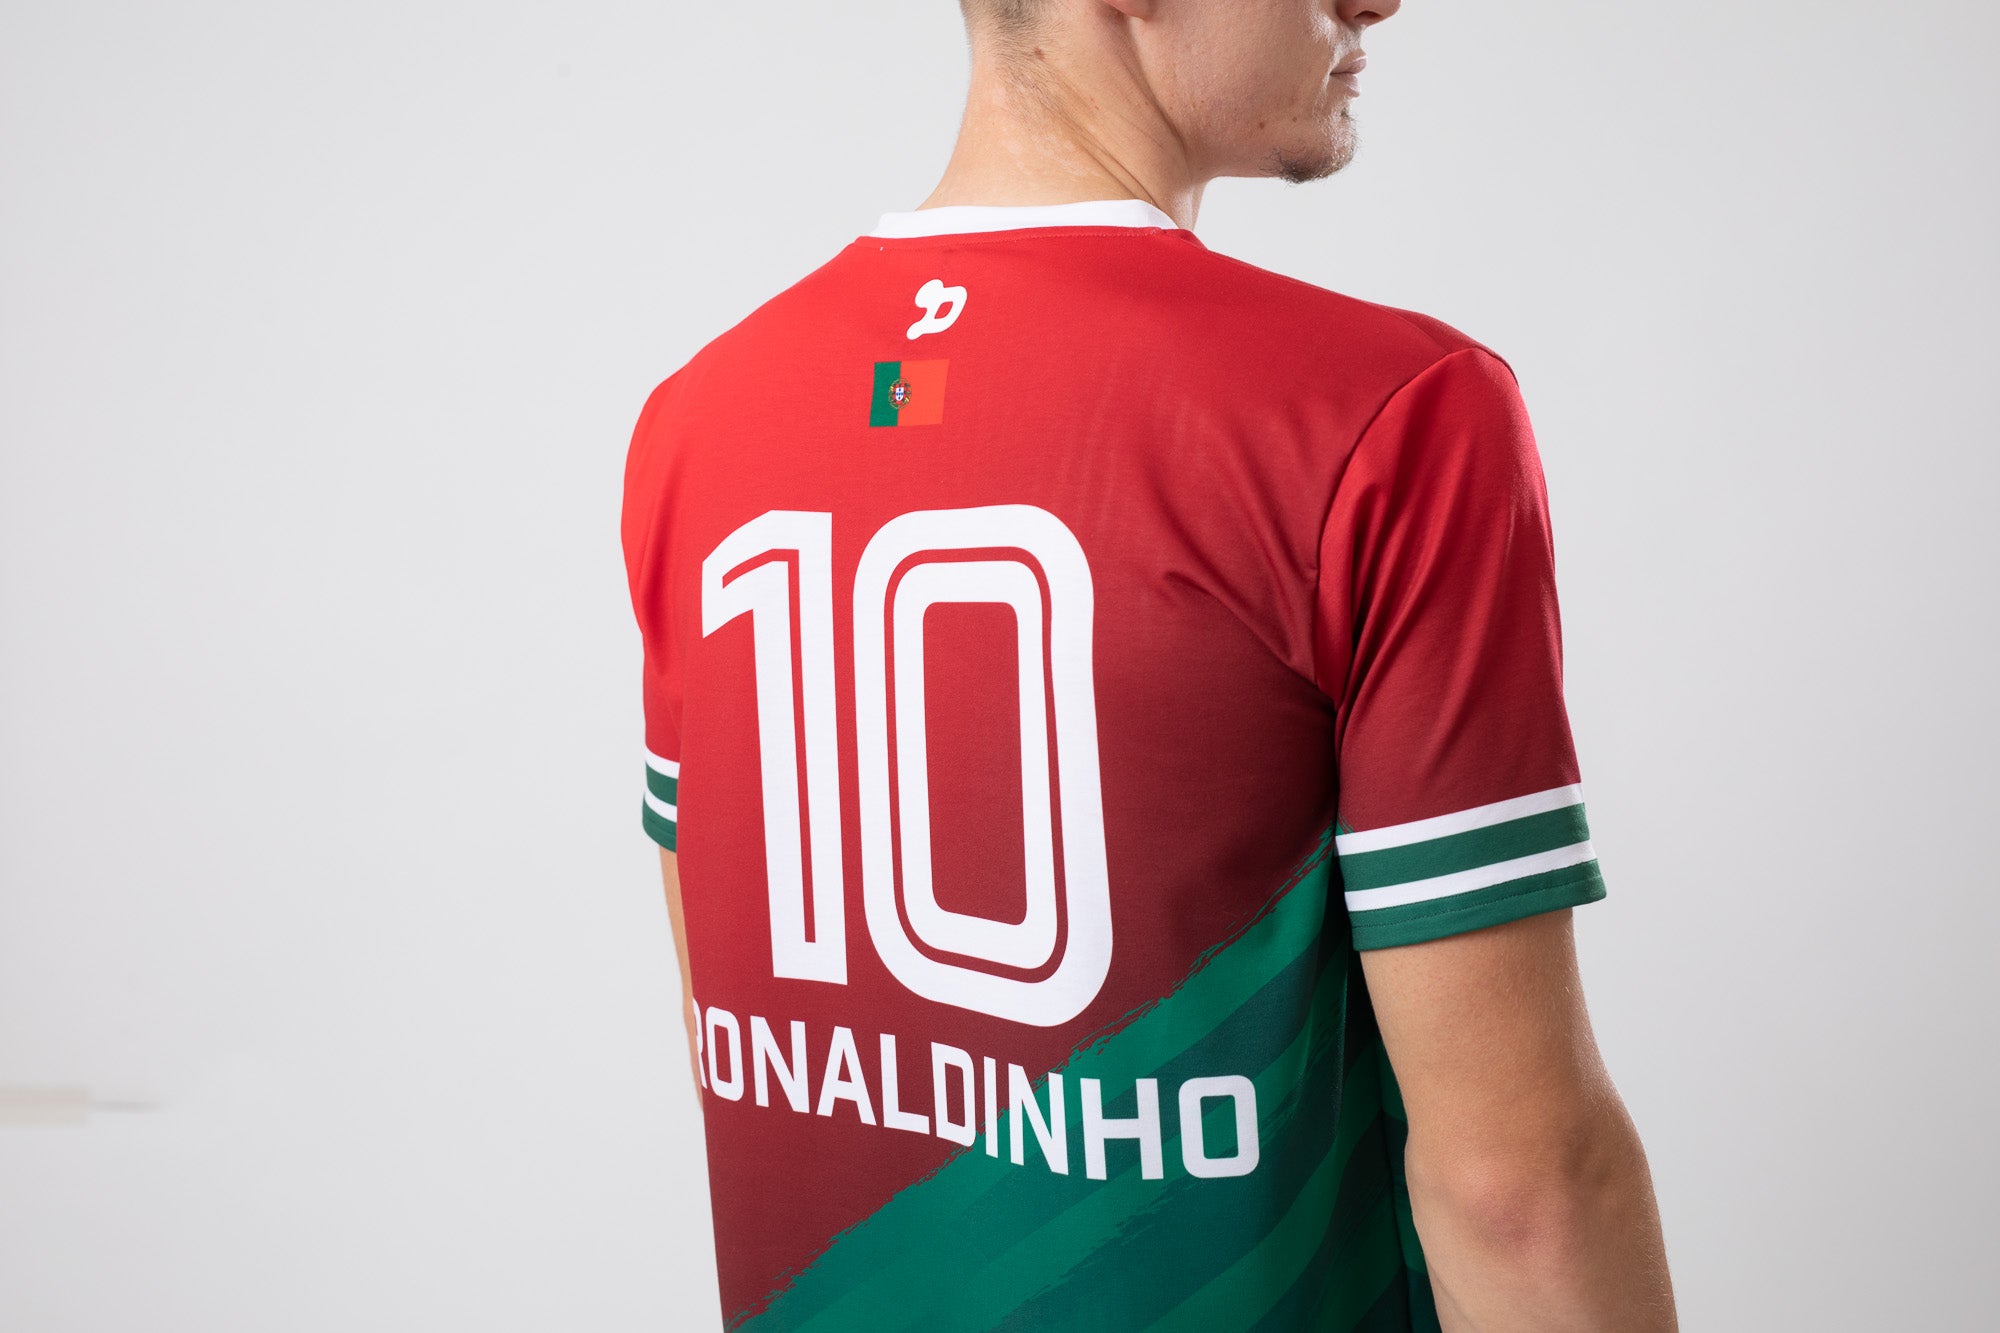 Ronaldinho Portugal Jersey/Camisa